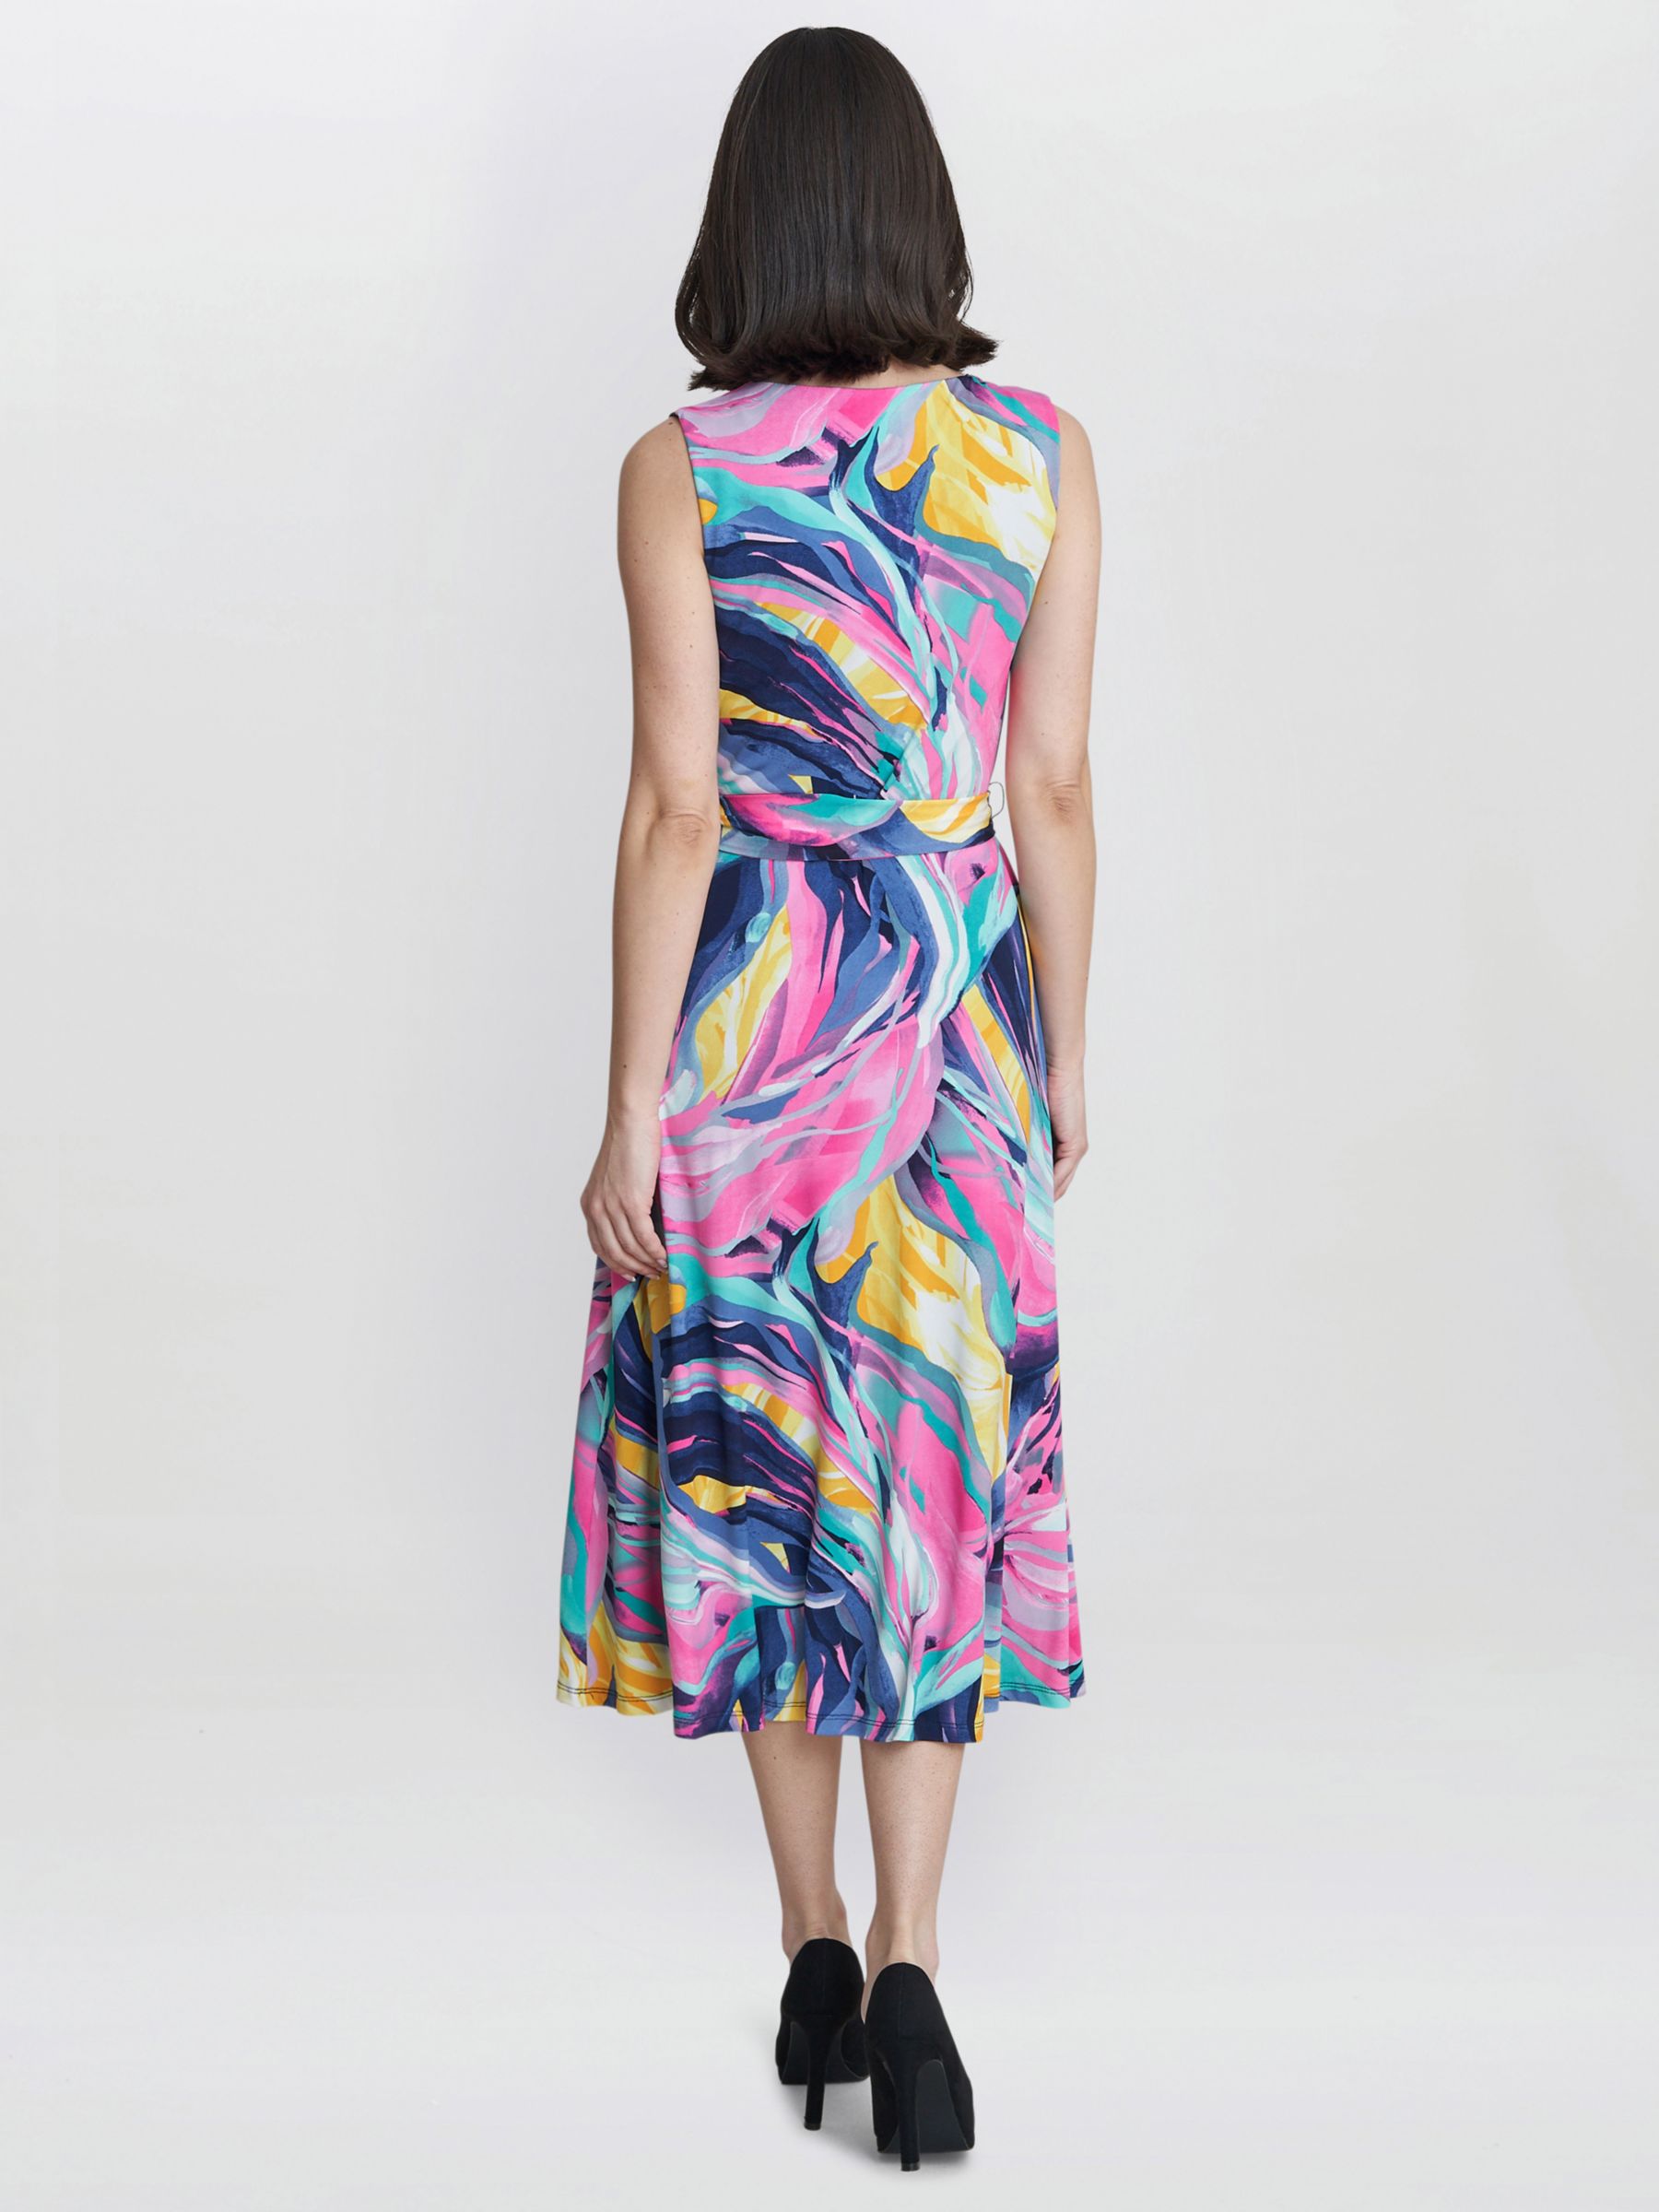 Gina Bacconi Anastacia Fit and Flare Abstract Print Midi Jersey Dress, Peach/Multi, 8